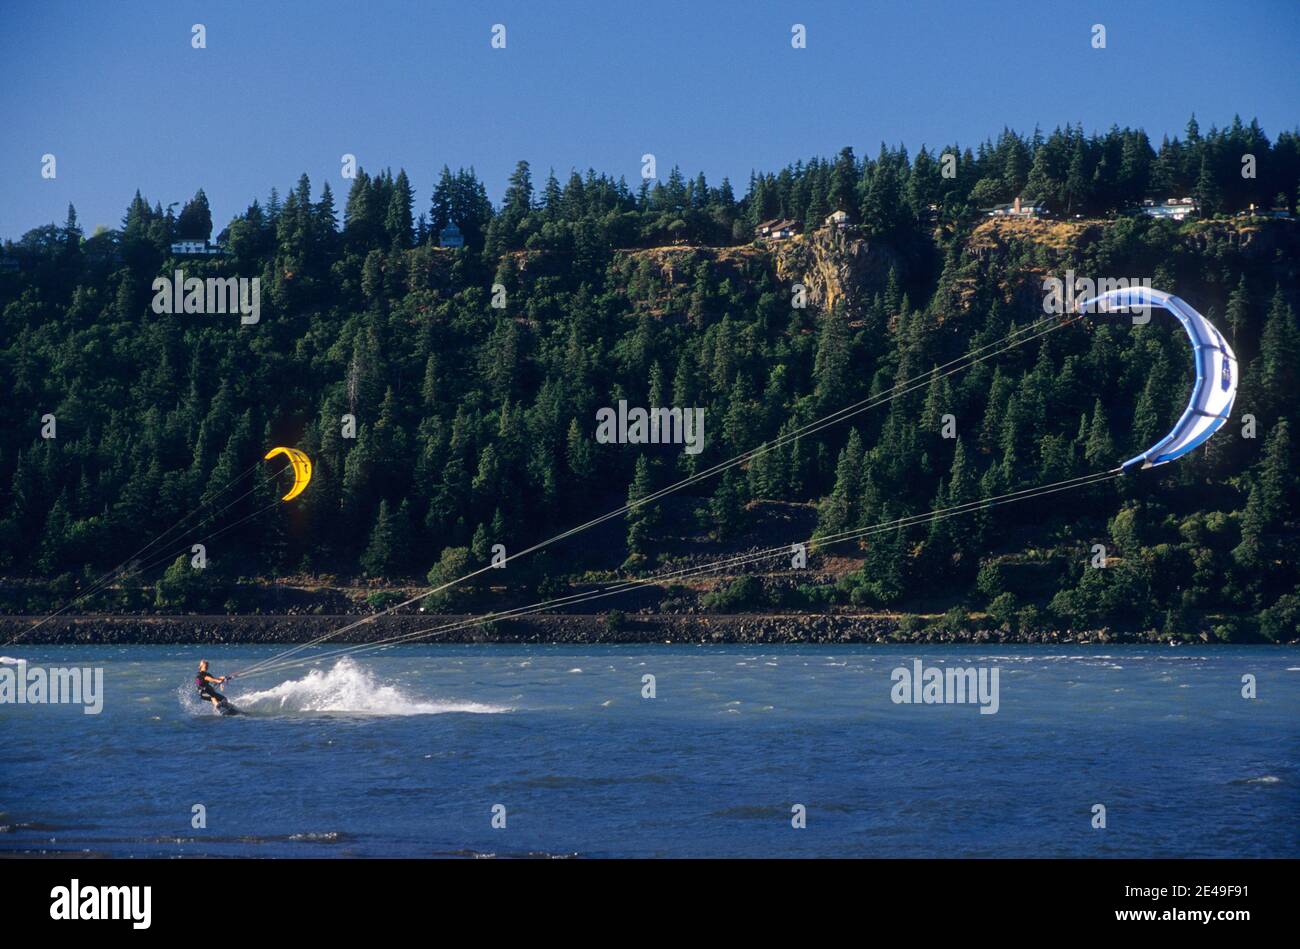 Kiteboarding hood river oregon